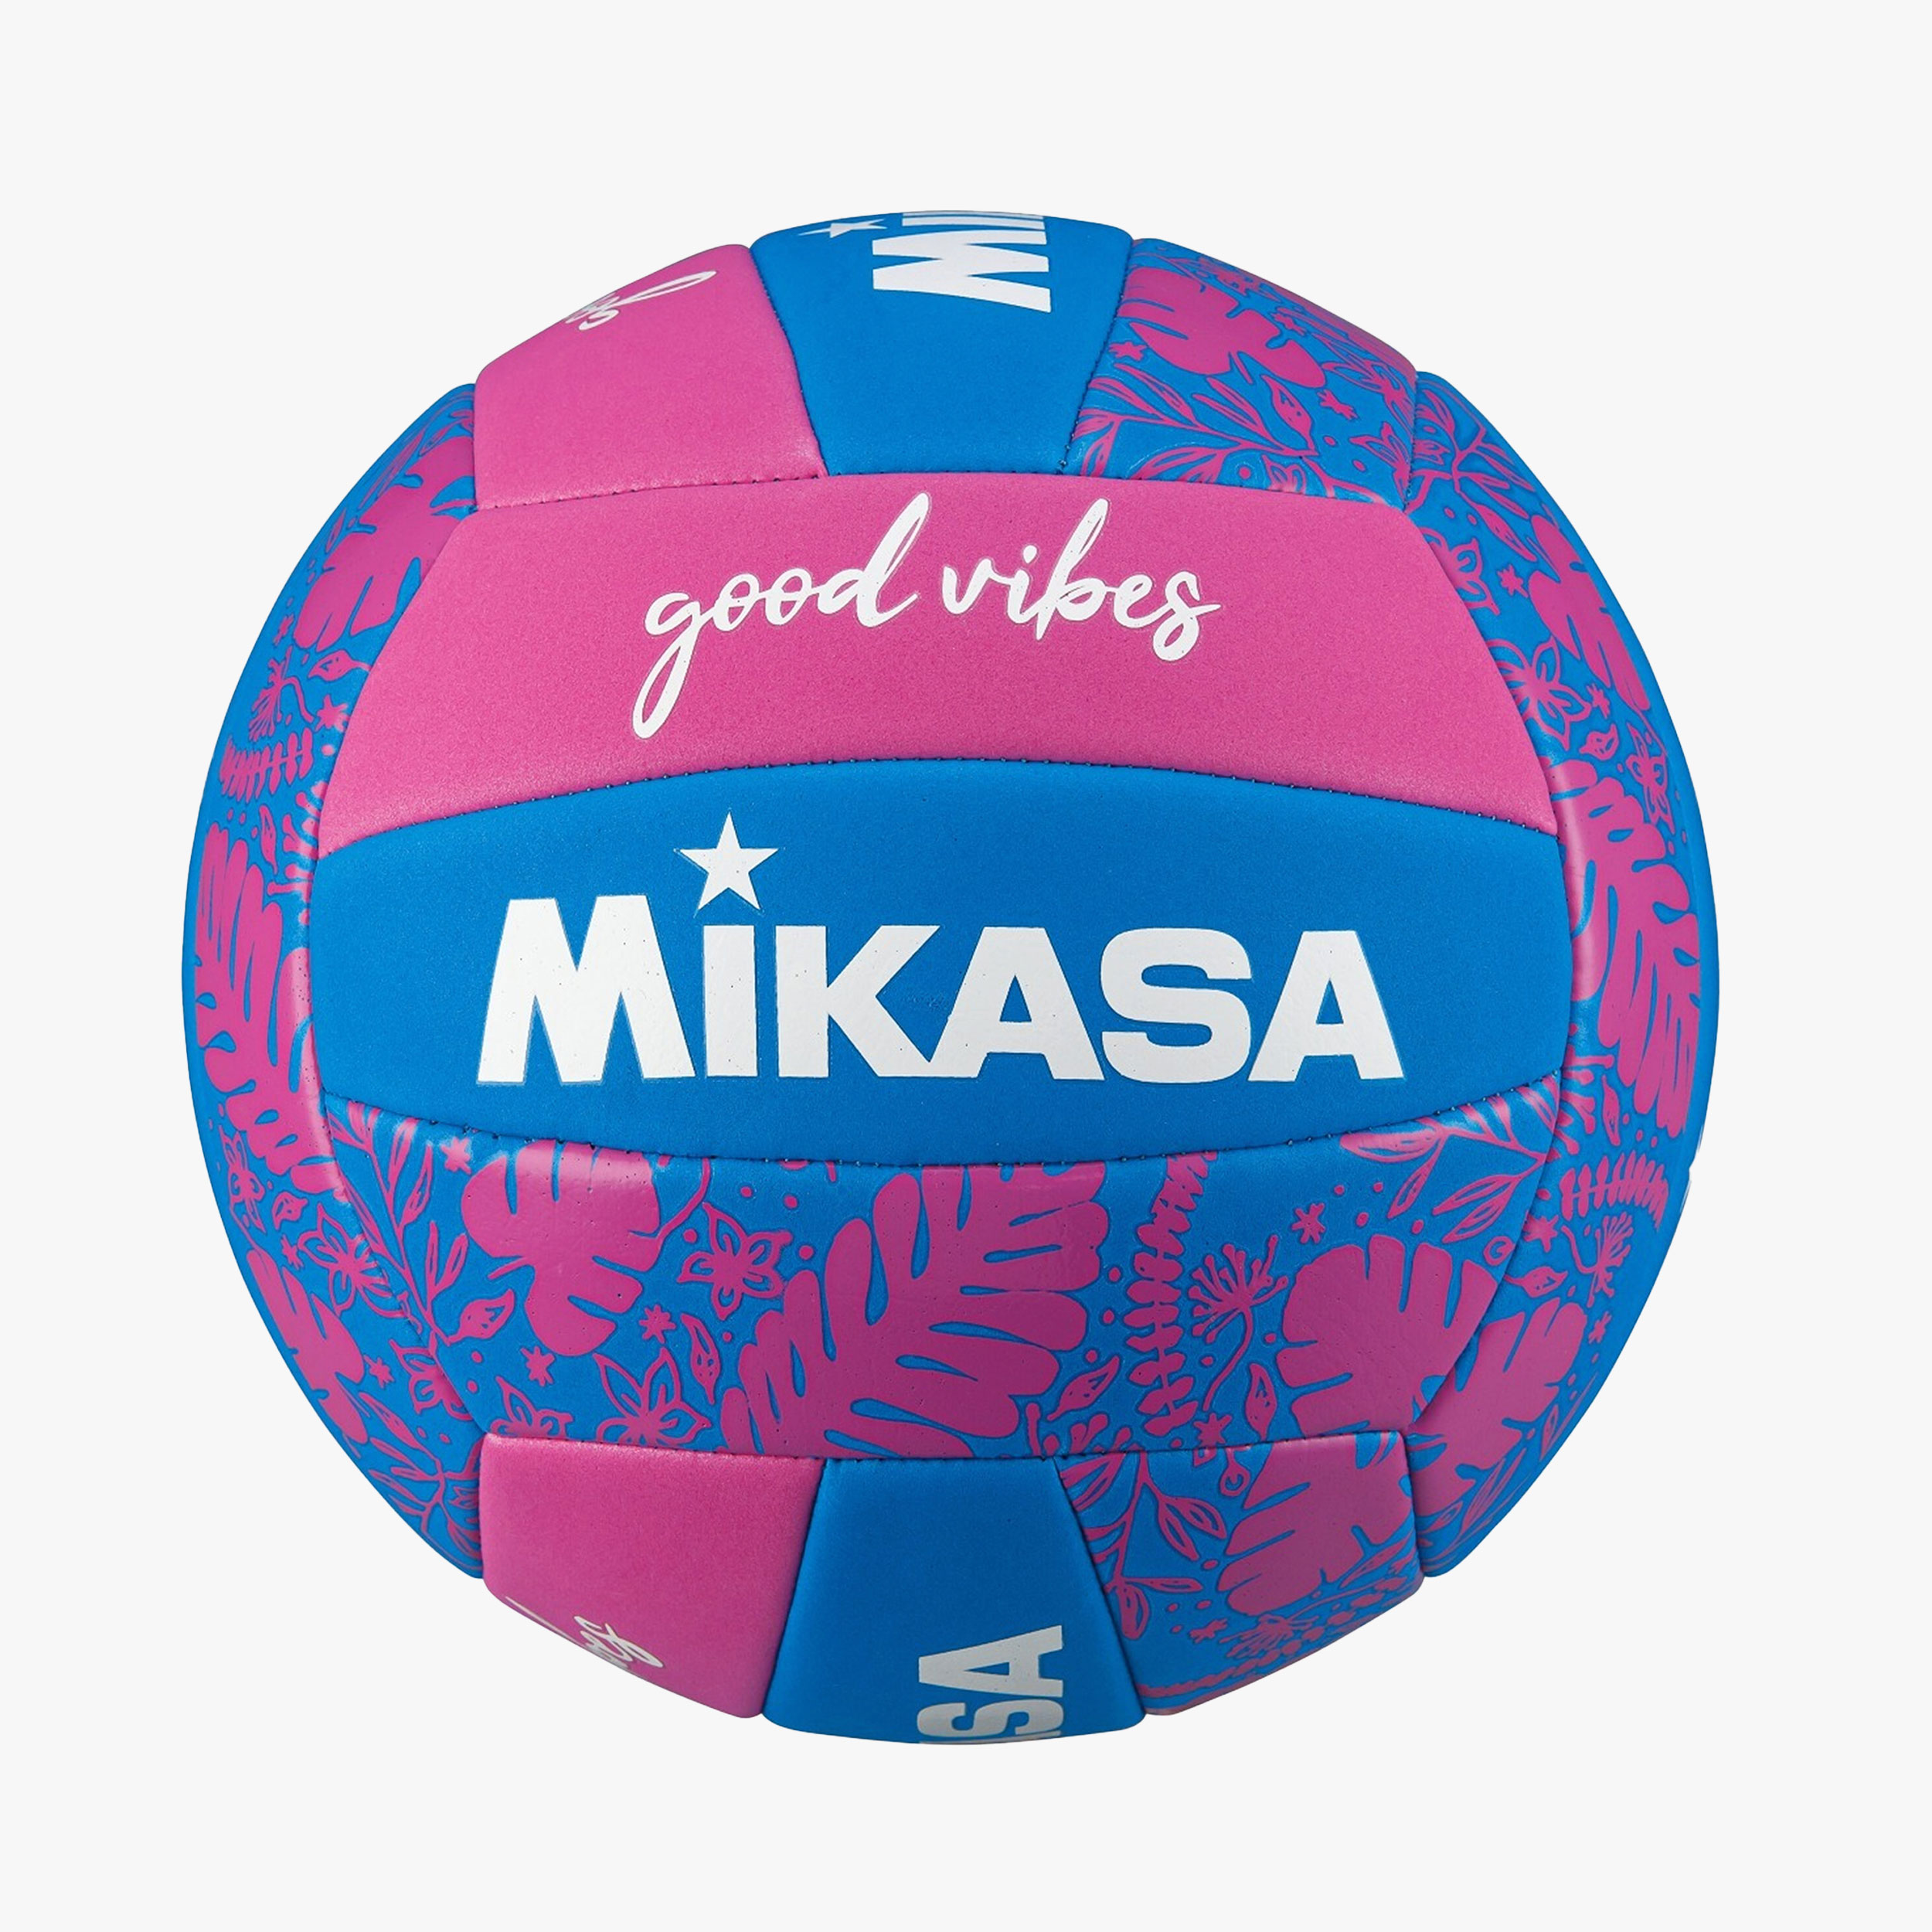 Mikasa Pelota de Voleibol Playa Bv354TV, SURTIDO, hi-res